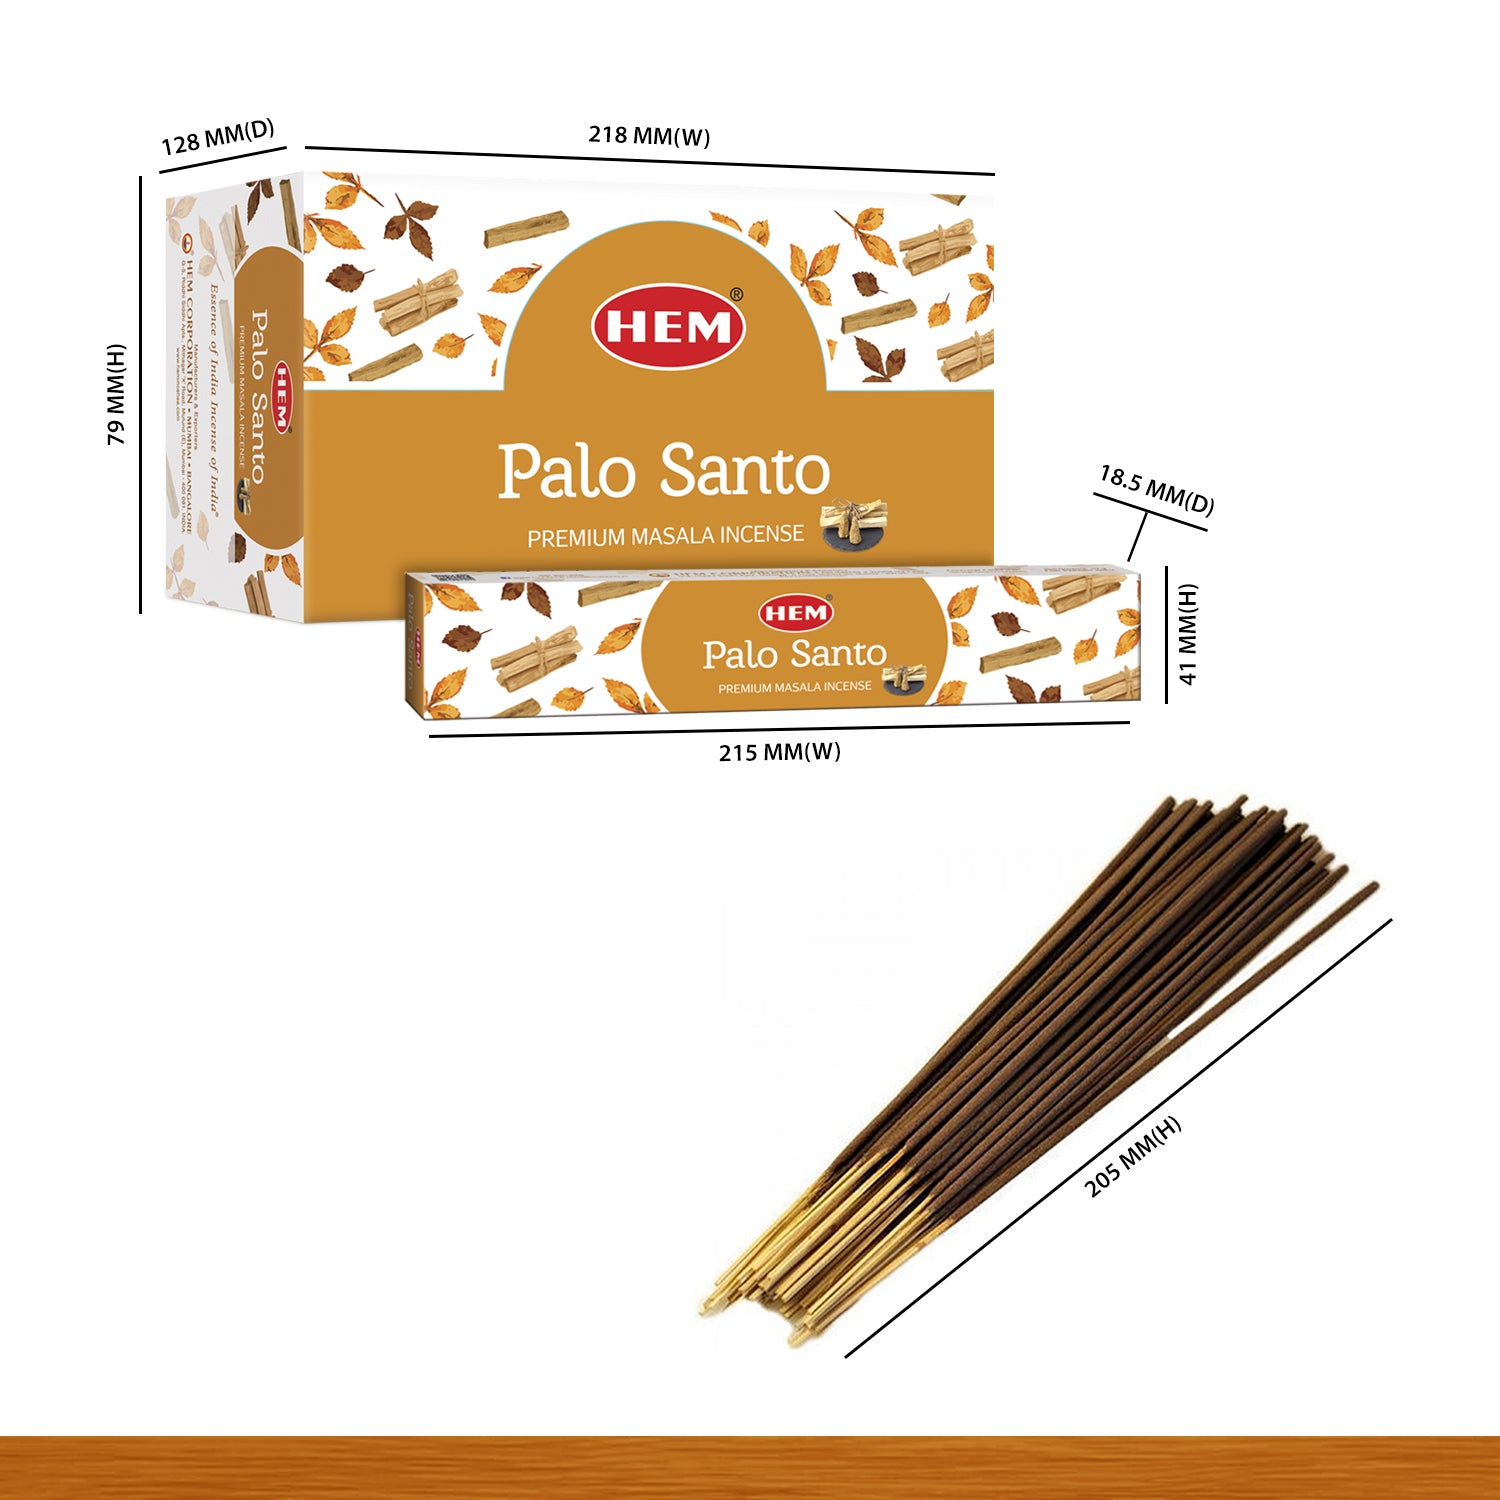 HEM Palo Santo Premium Masala Incense Sticks - 12 Packets (15g Each)